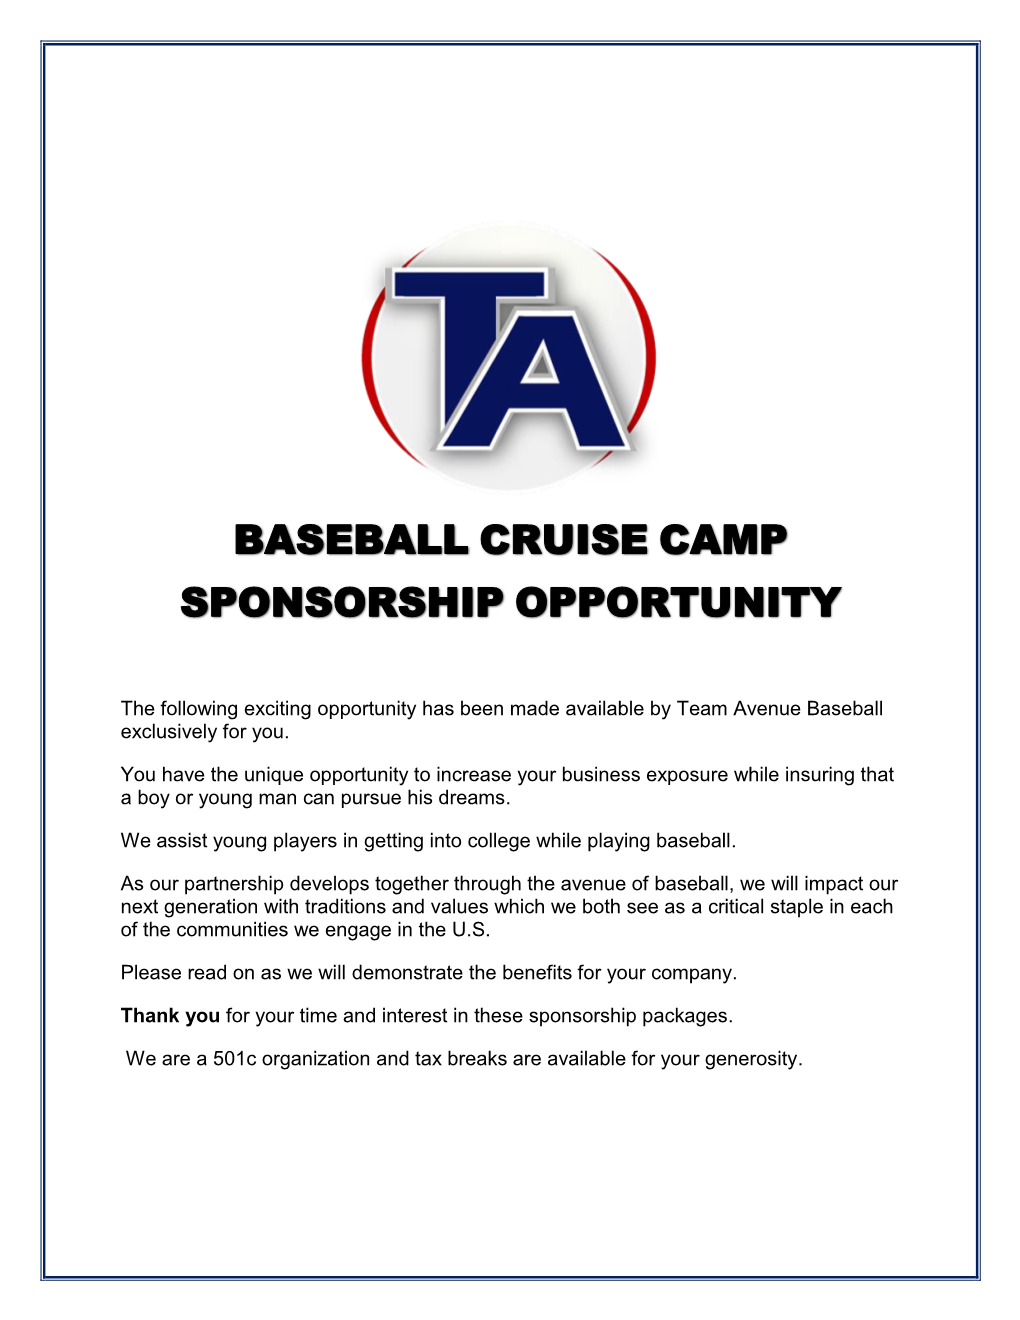 Baseball Cruise Camp Sponsorship Opportunity